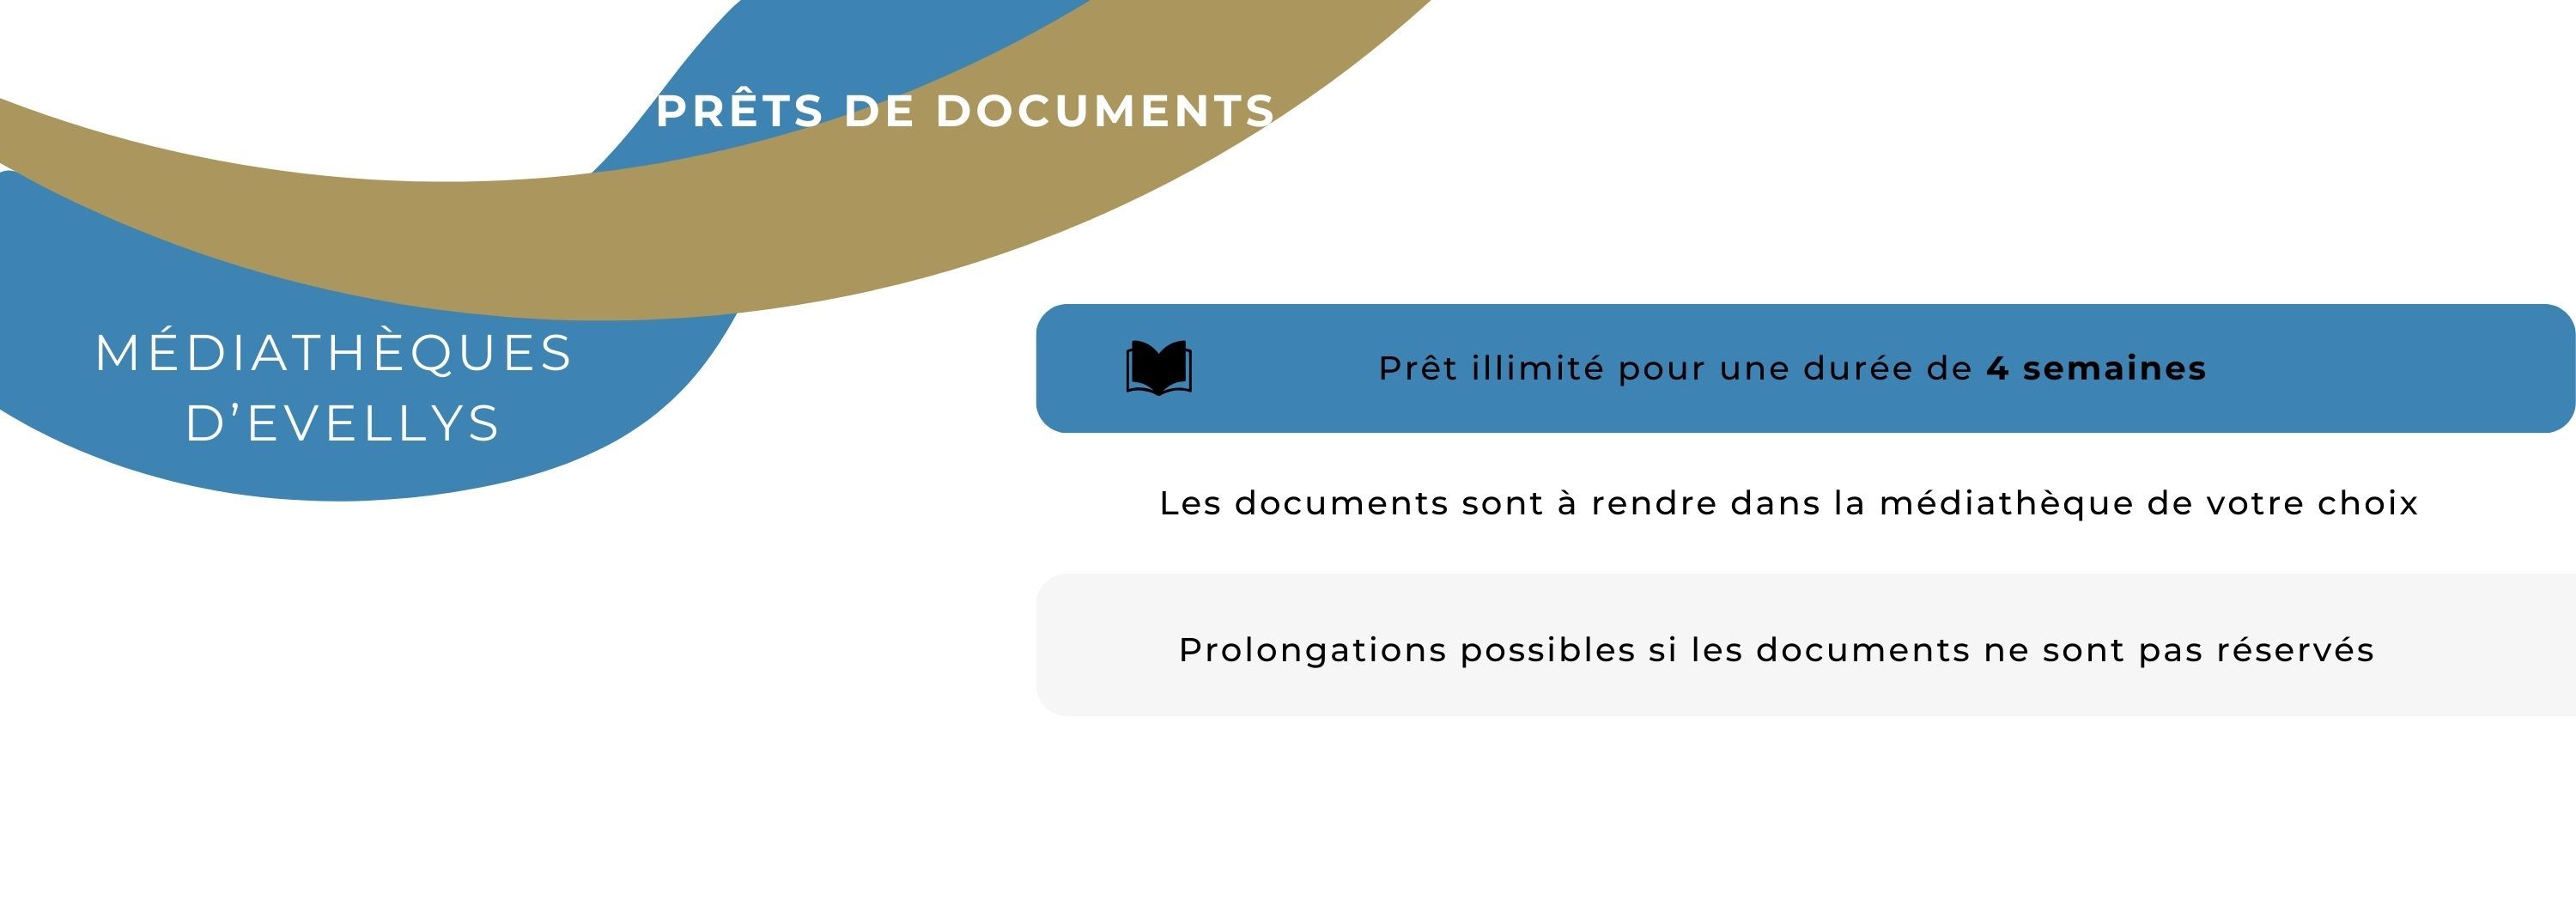 Prets documents